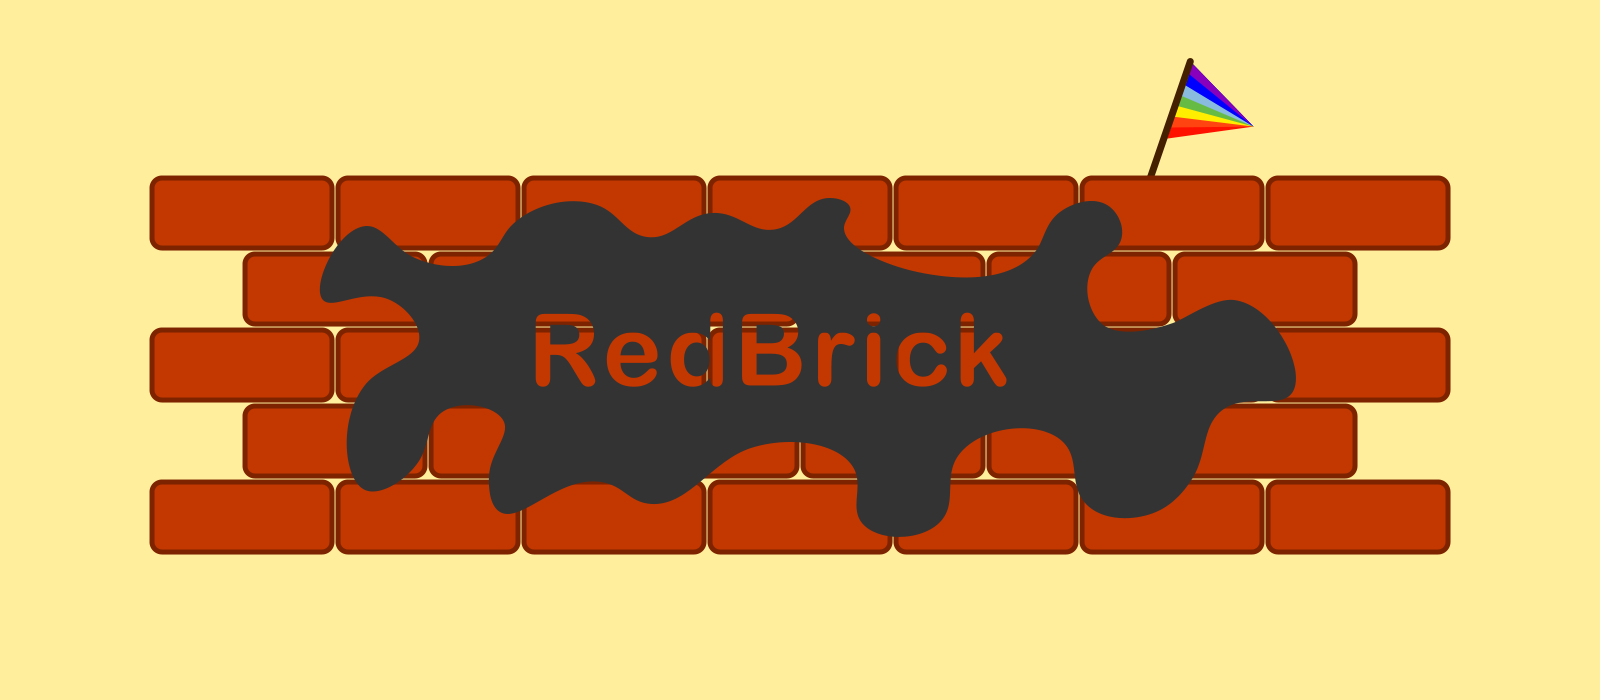 RedBrick's featured image